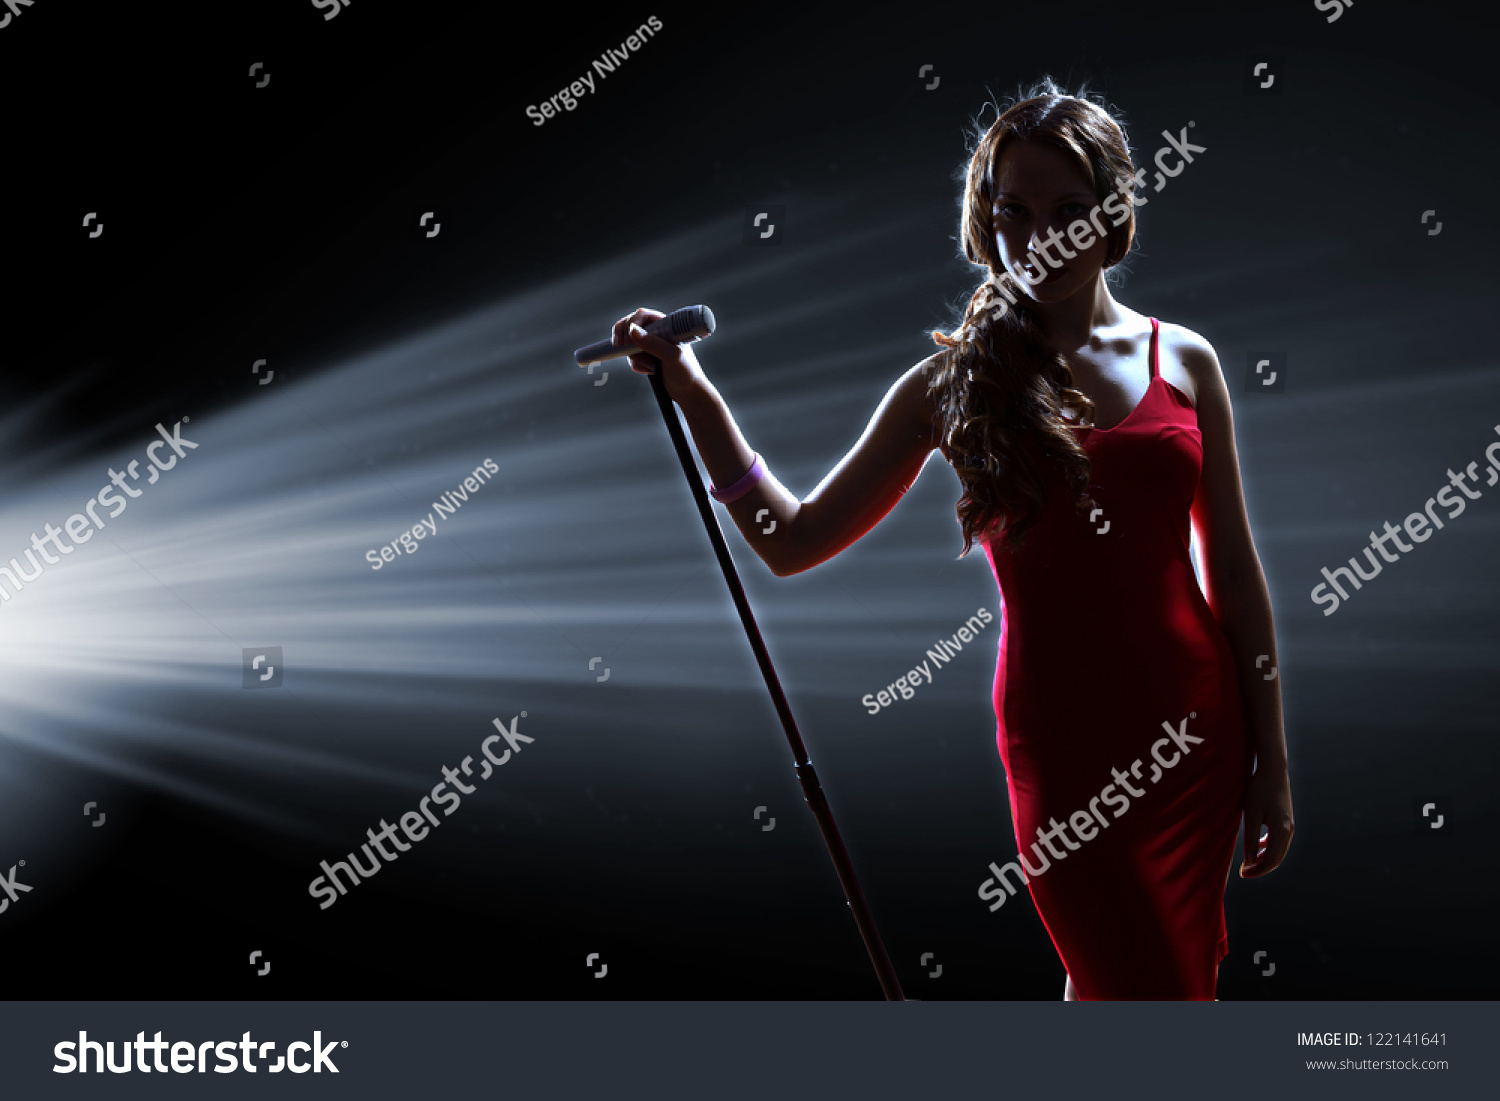 Девушка певица на сцене